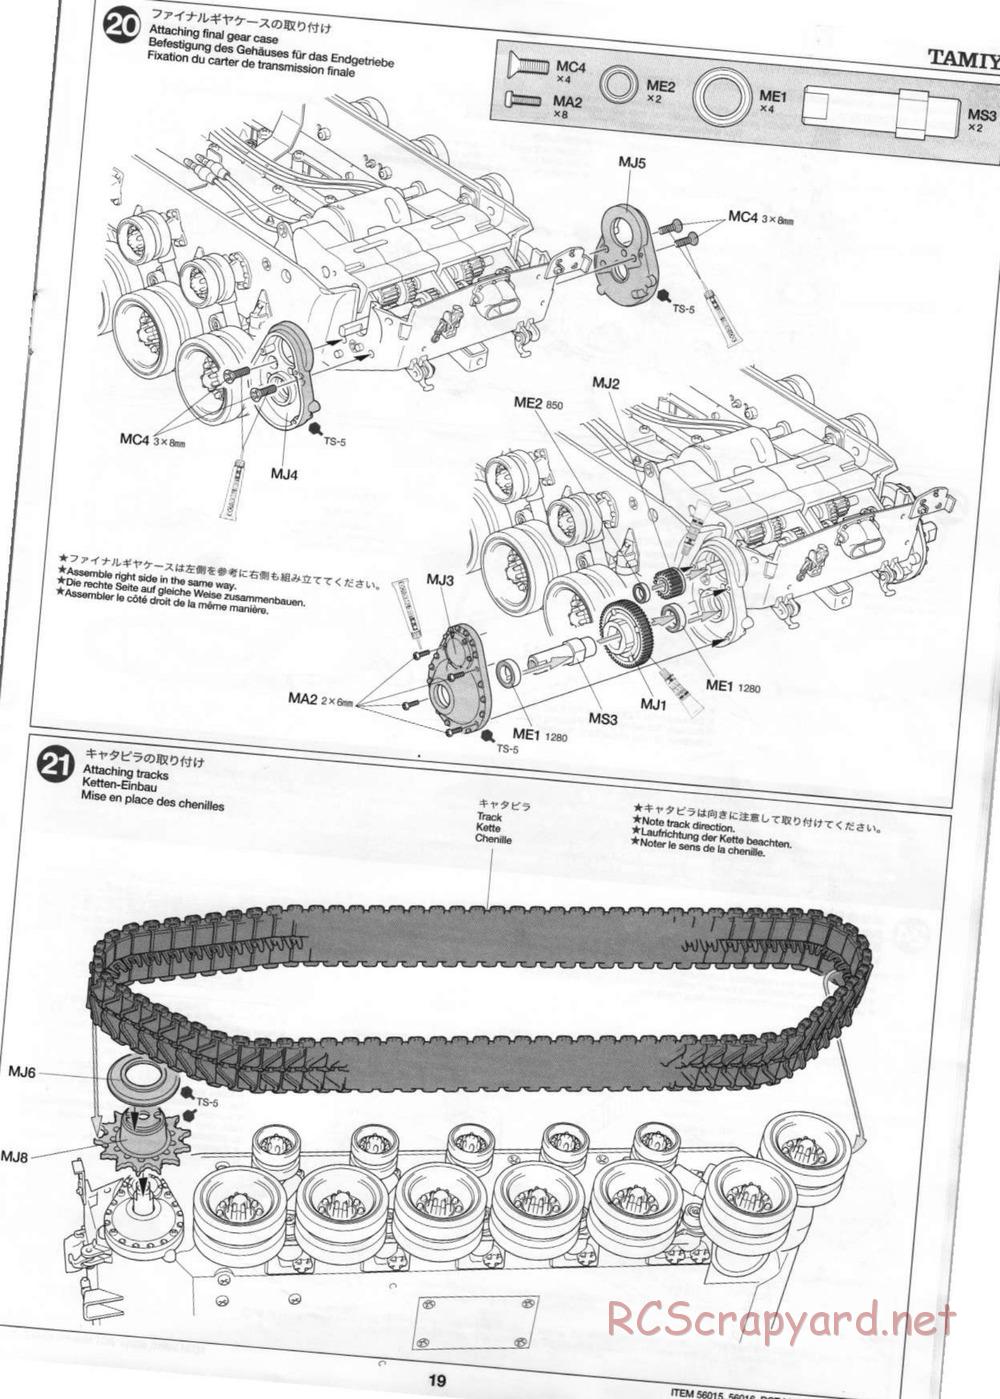 Tamiya - M26 Pershing - 1/16 Scale Chassis - Manual - Page 19